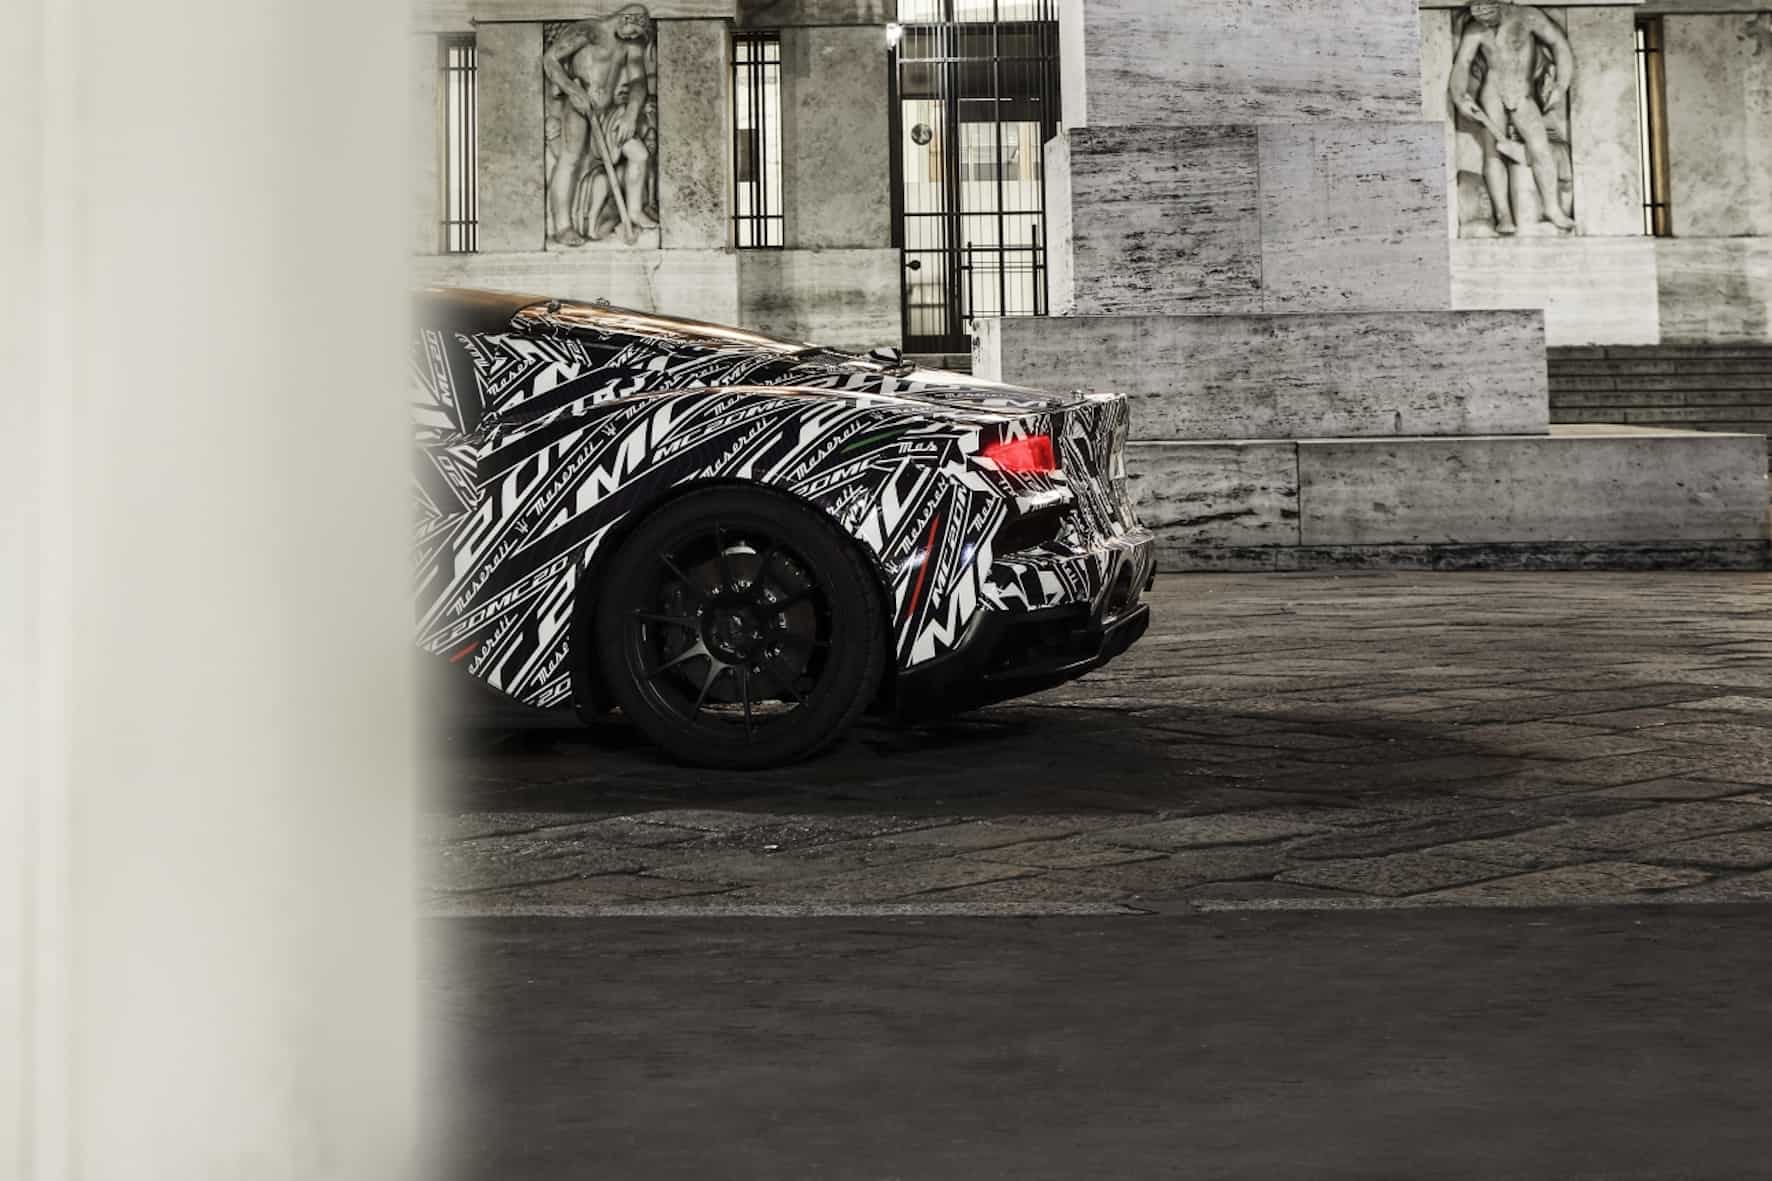 Maserati MC20: Prototyp auf nächtlicher Tour